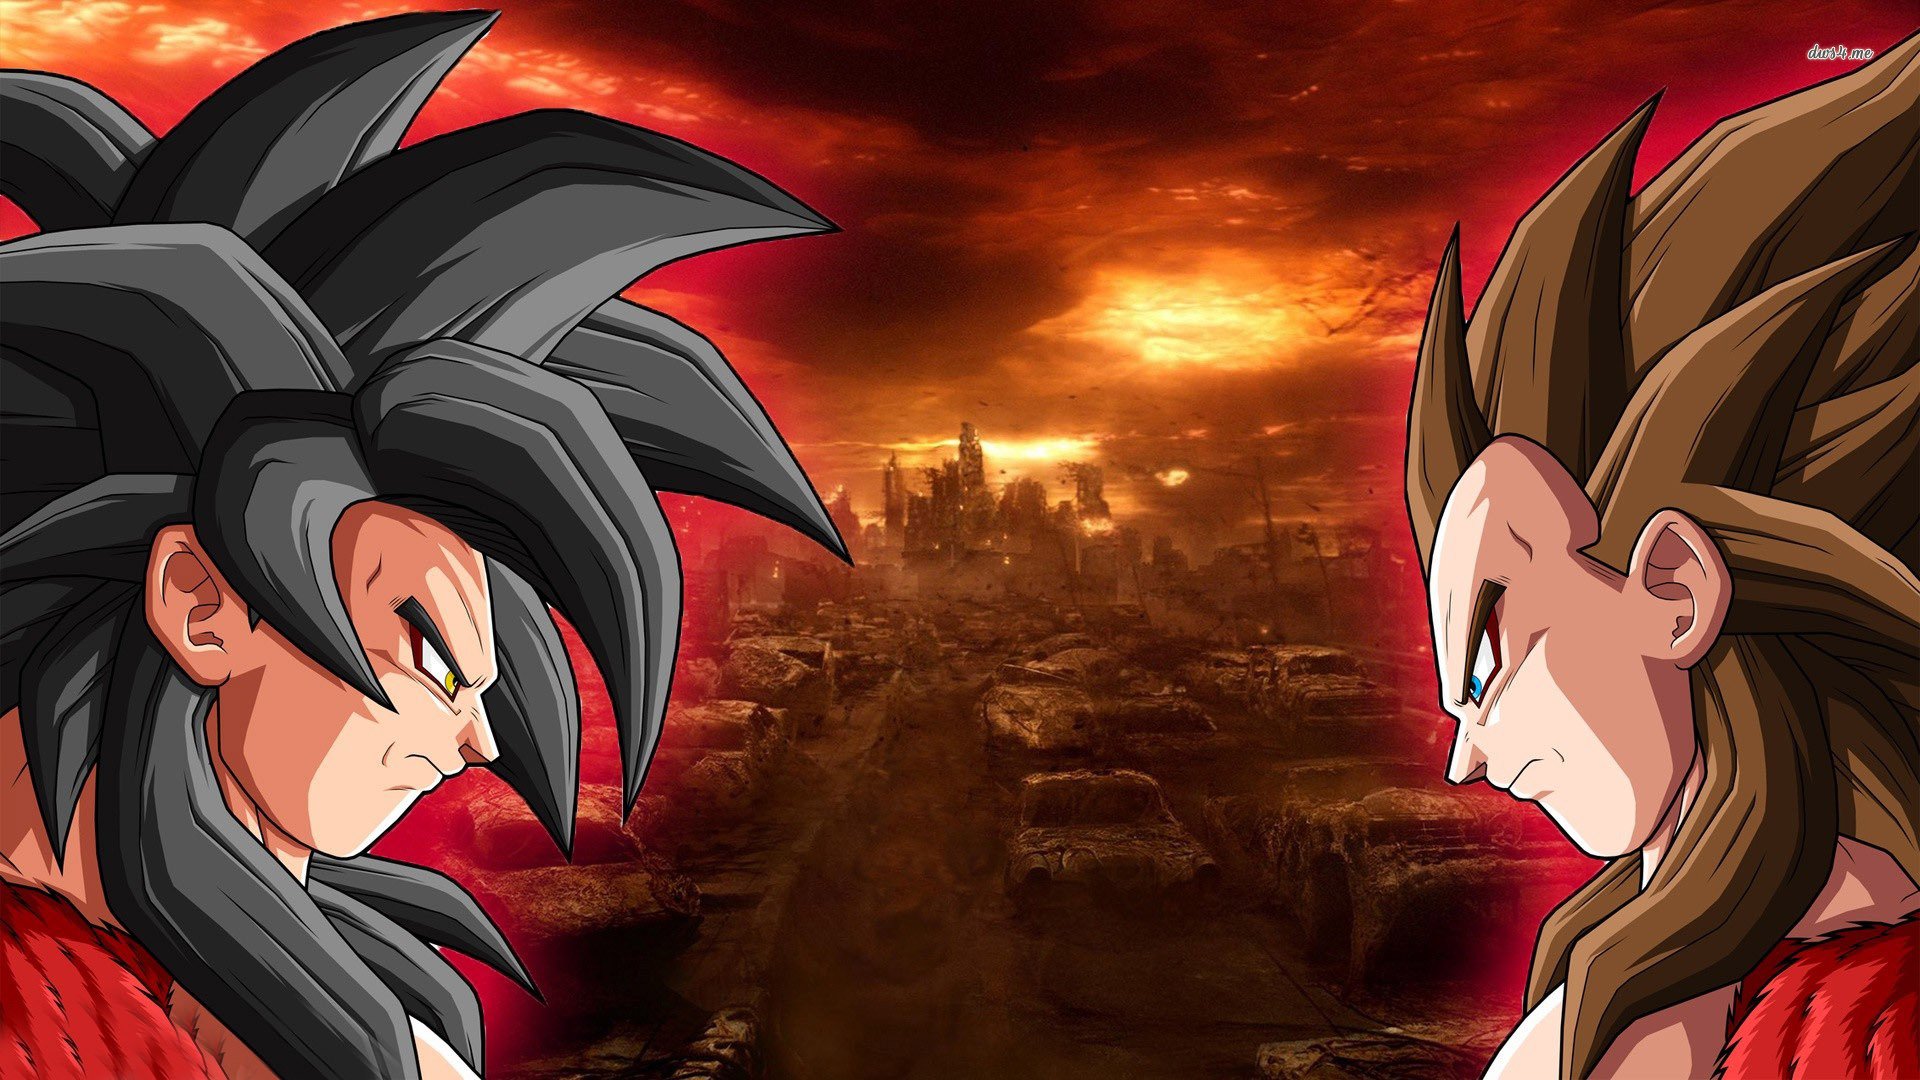 Goku vs Vegeta   Dragon Ball Z wallpaper 1280x800 Goku vs Vegeta